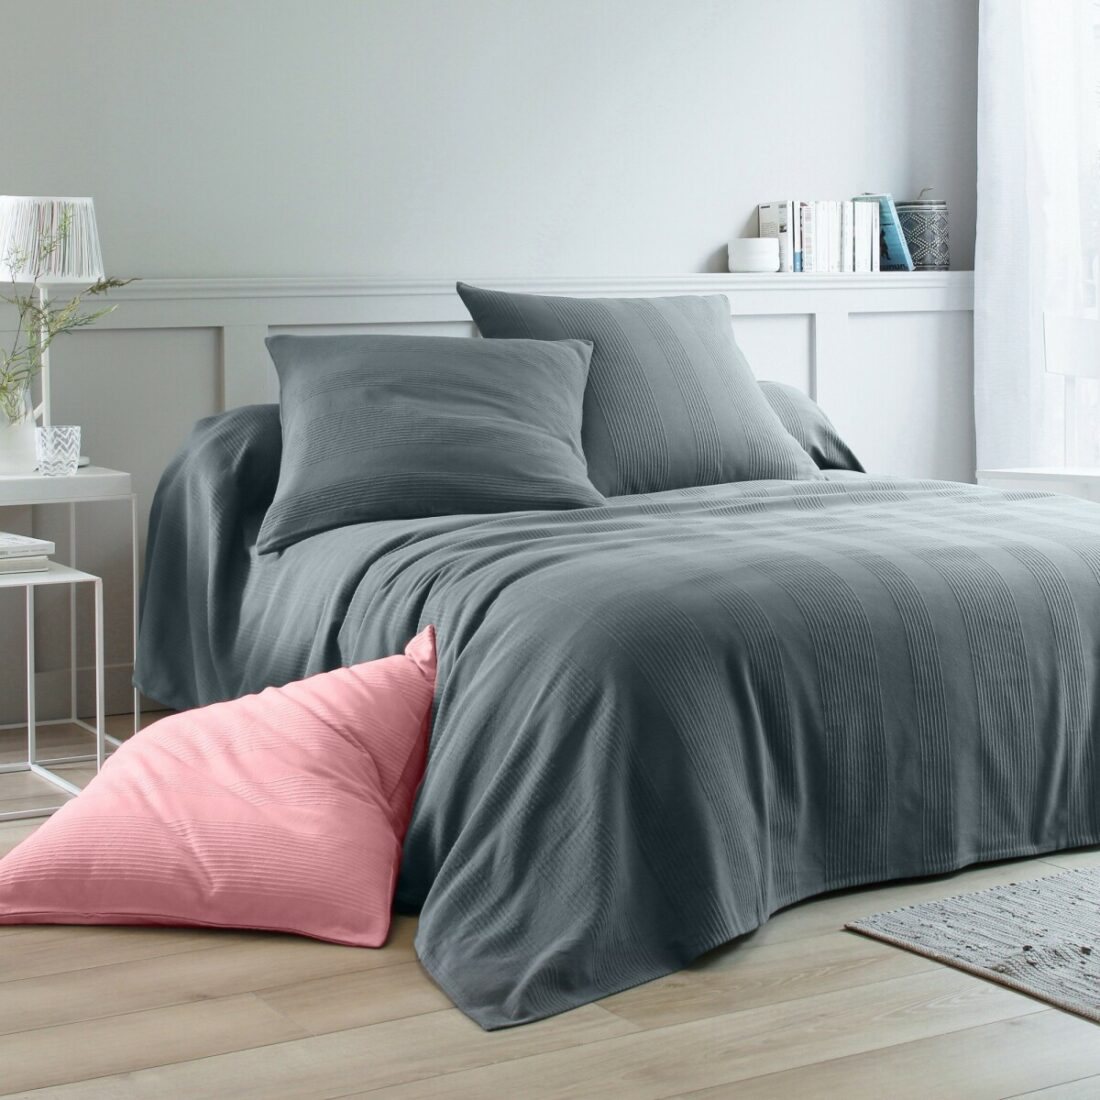 Jednobarevný tkaný přehoz na postel